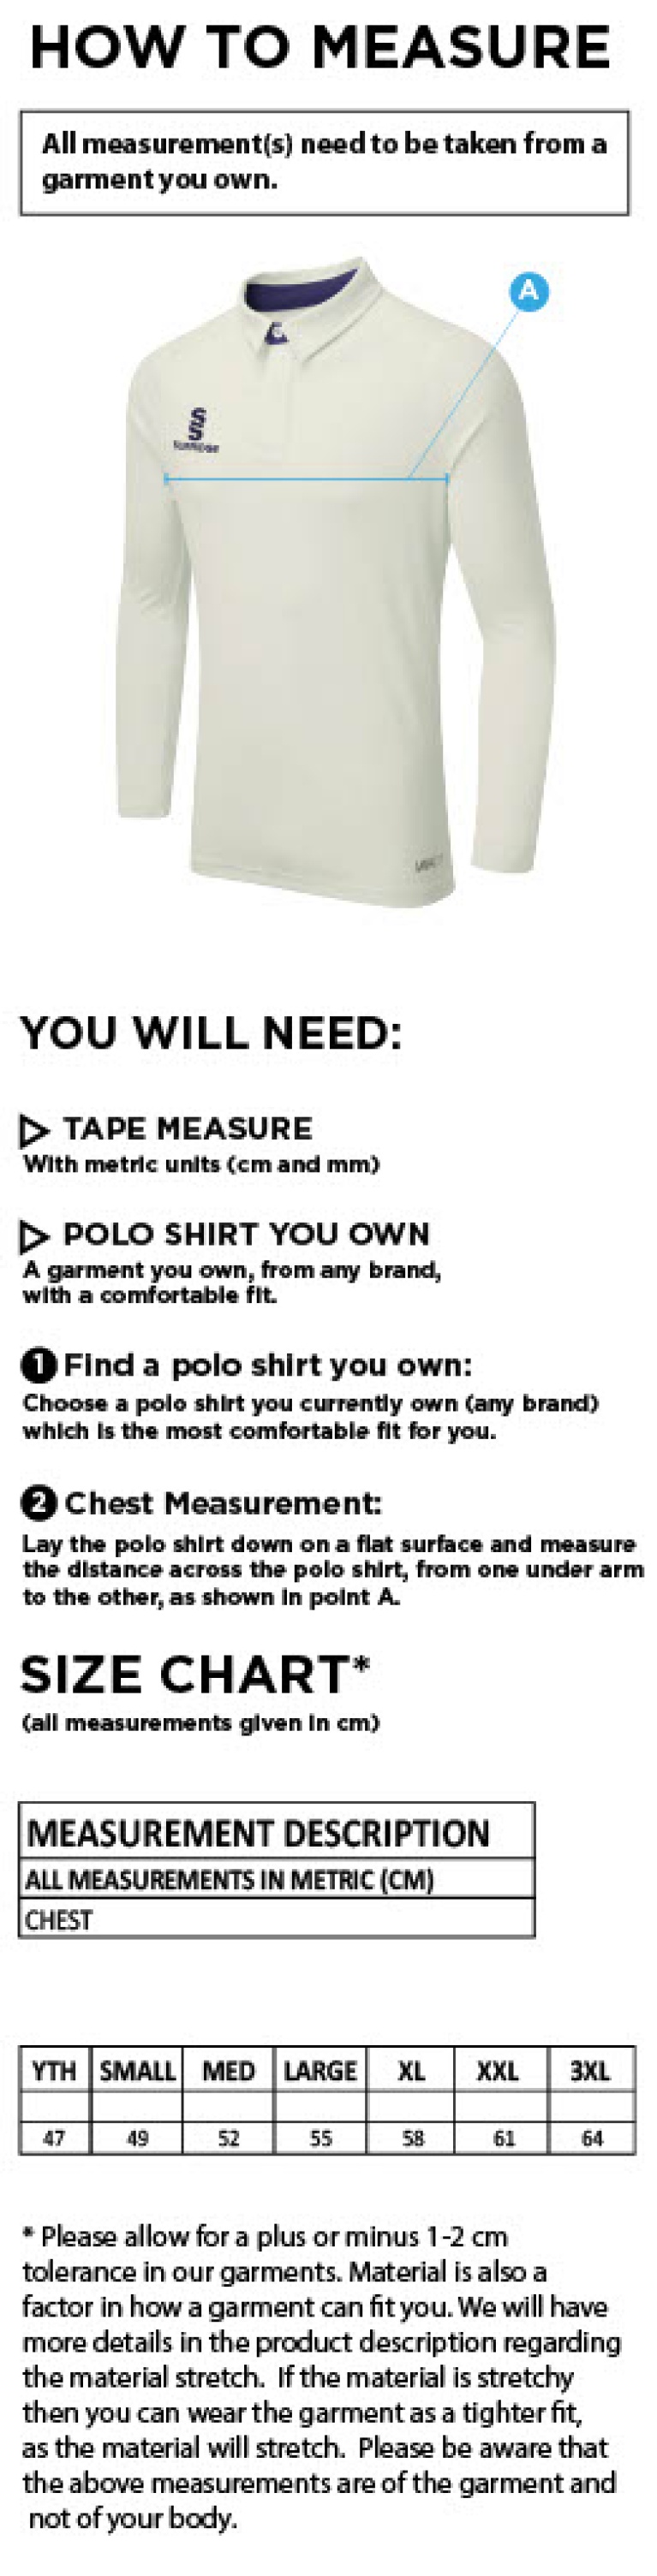 Stockport Trinity CC - Long Sleeve Tek Shirt - Size Guide